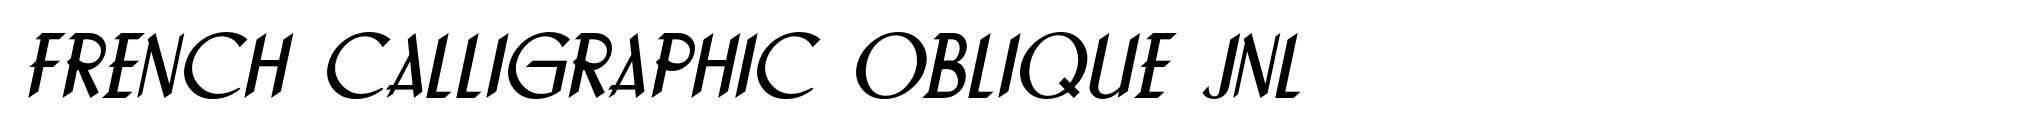 French Calligraphic Oblique JNL image